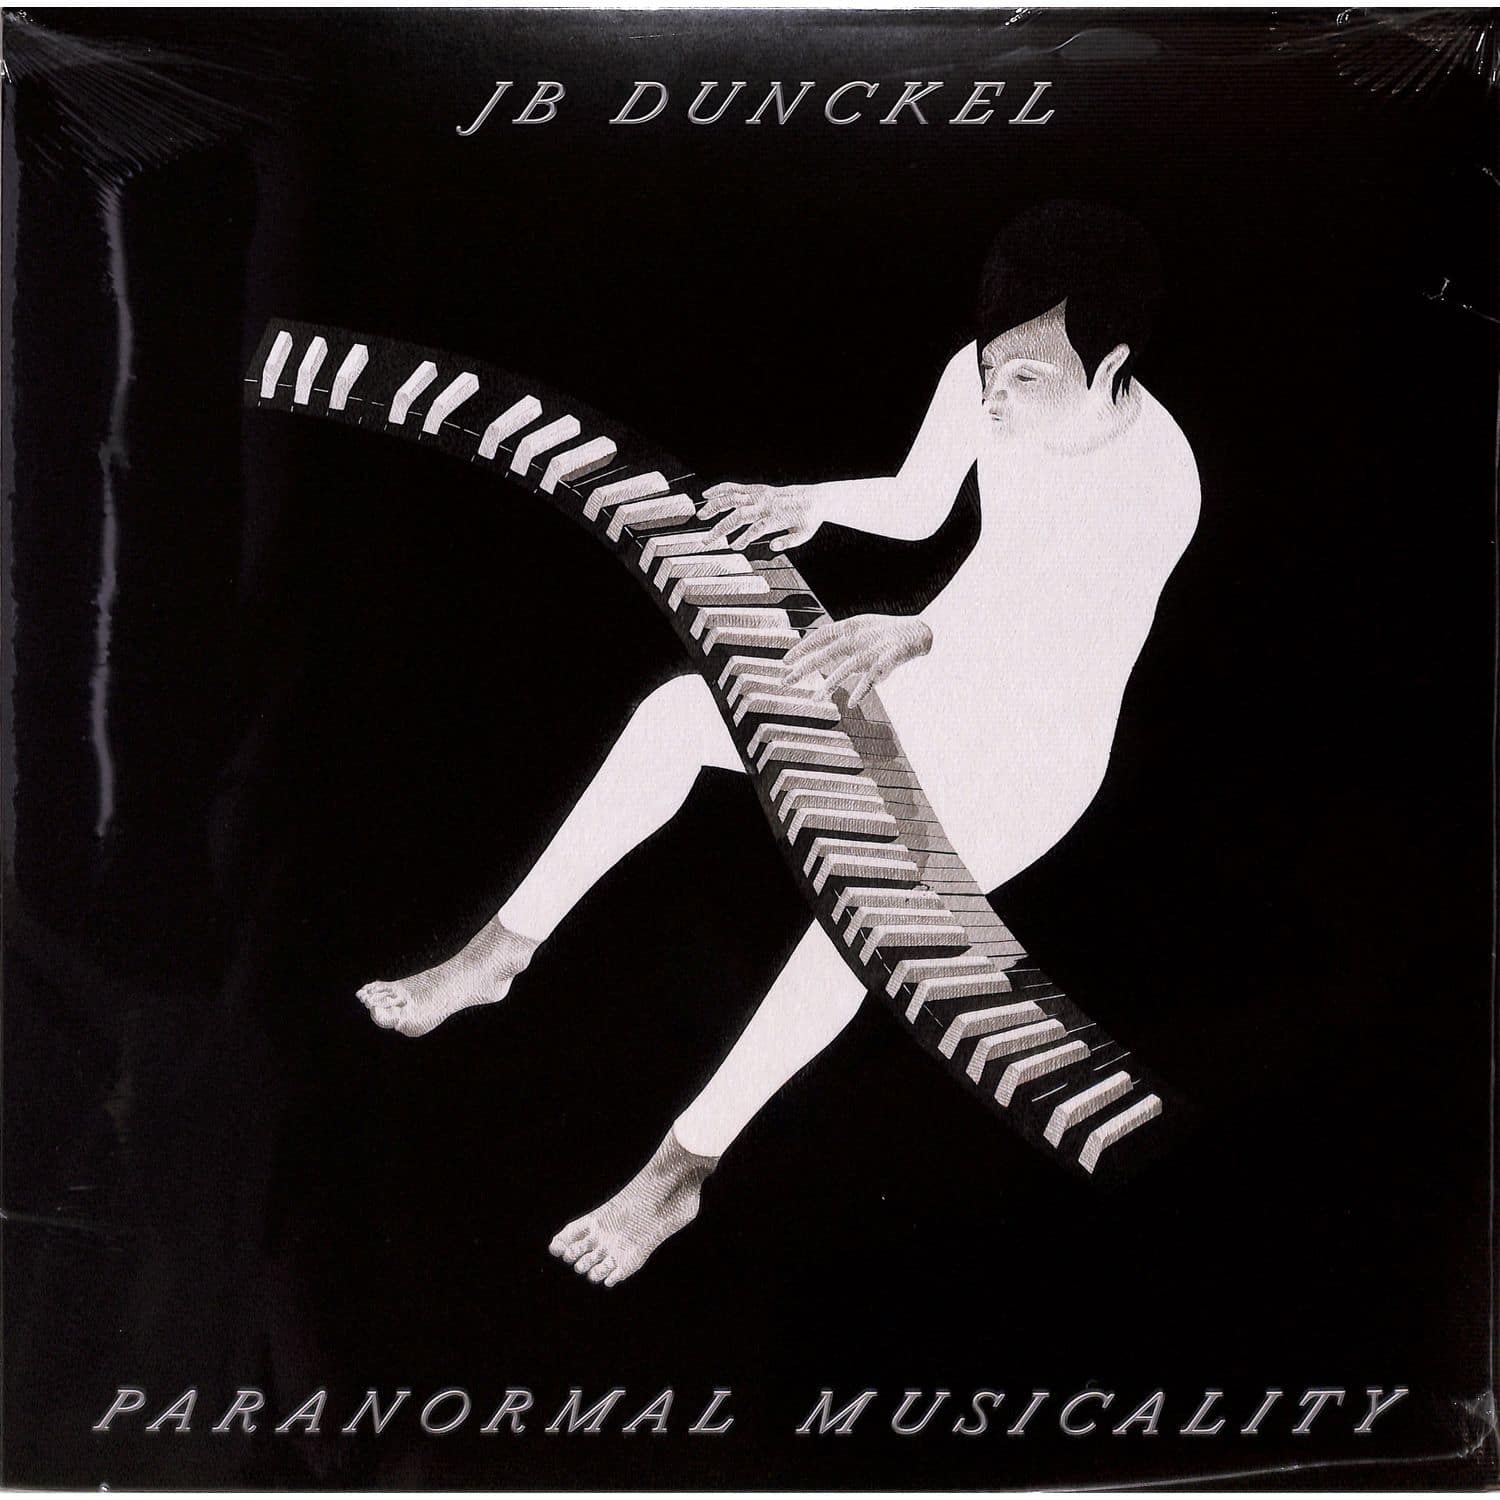 JB Dunckel - PARANORMAL MUSICALITY 